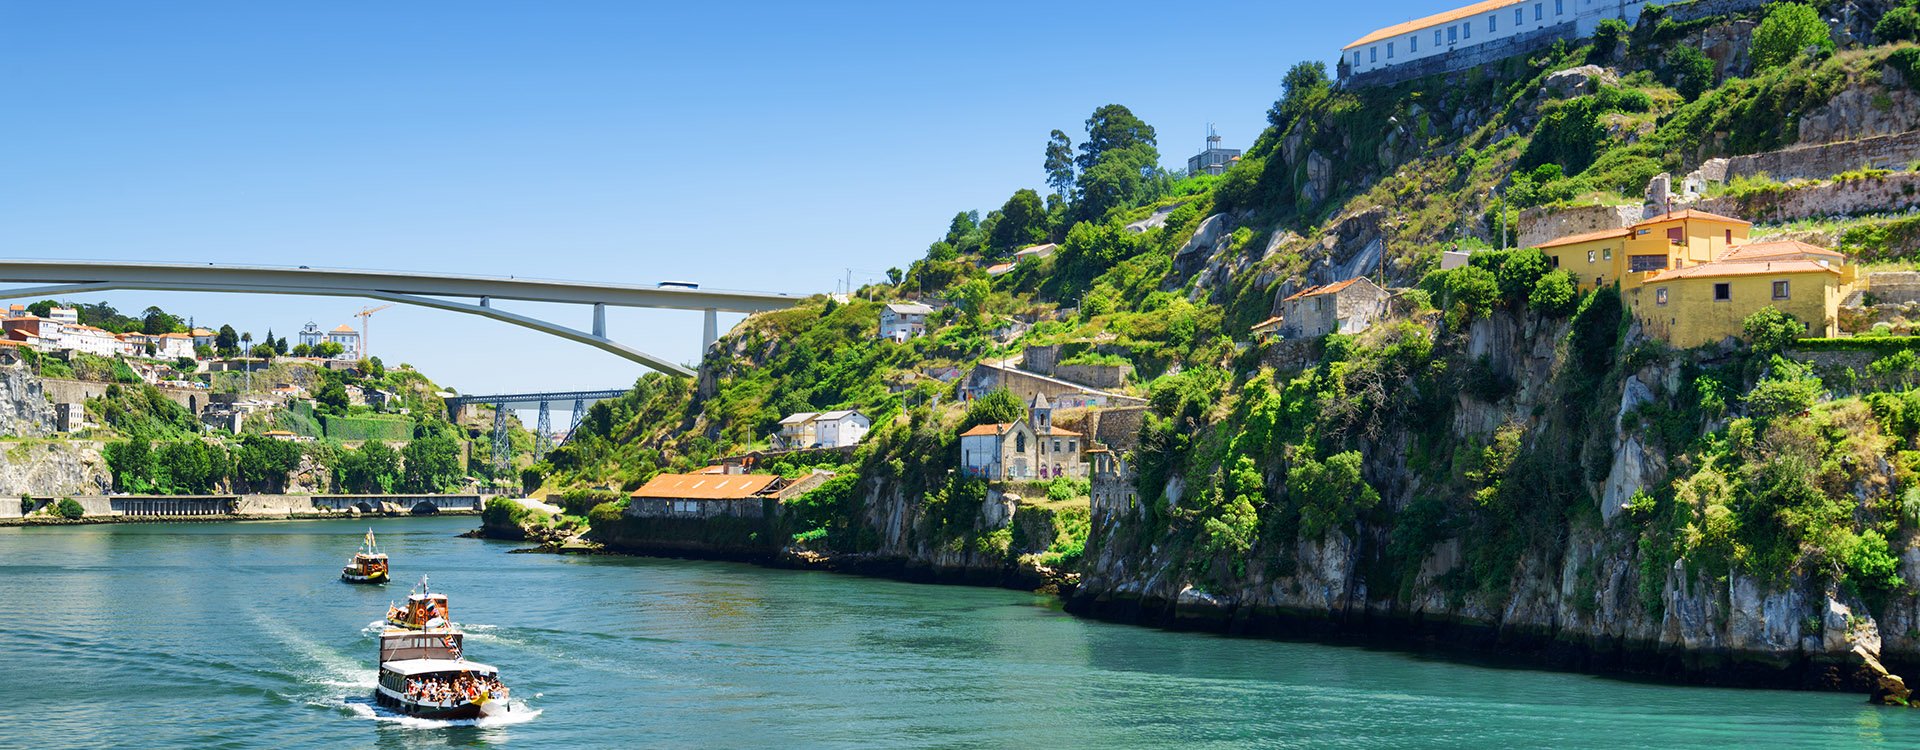 The beautiful view of the Douro River in Porto, Portugal